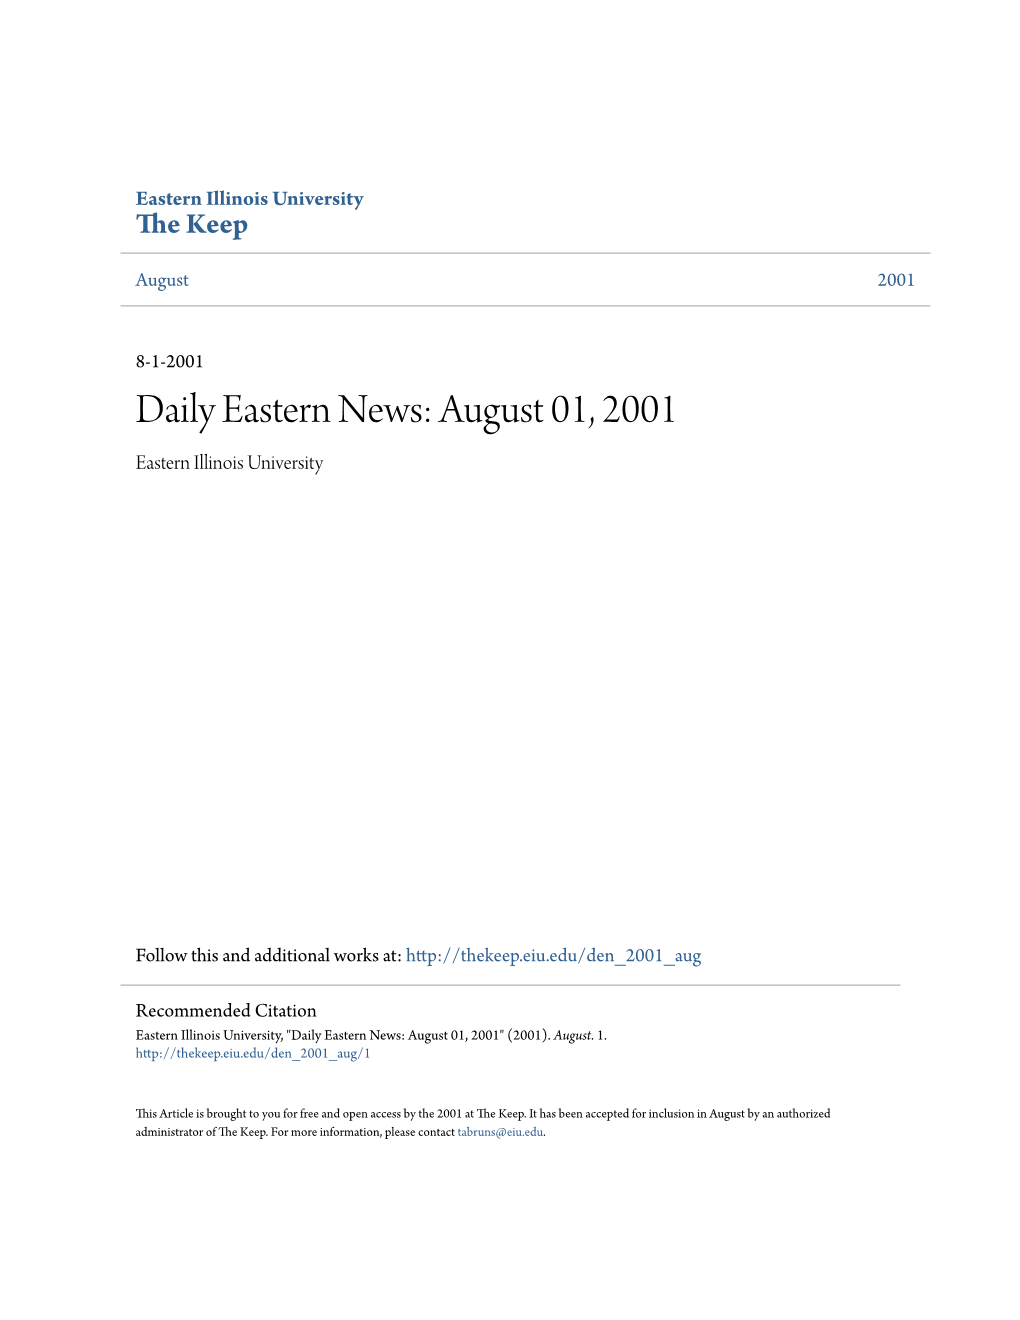 Daily Eastern News: August 01, 2001 Eastern Illinois University